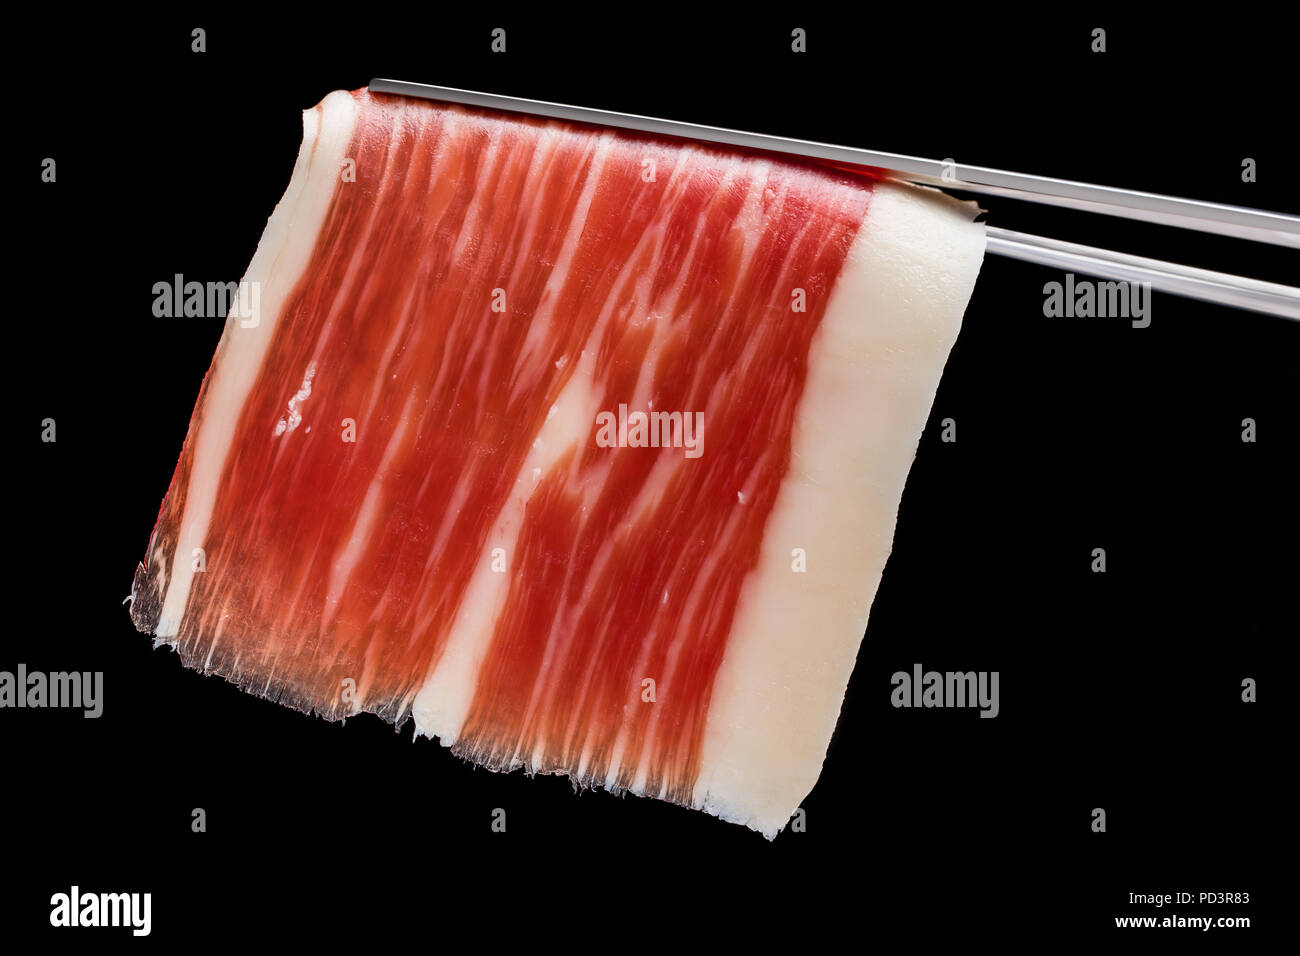 Extreme macro close up of cut piece of cured Spanish bellota pork ham on tweezer. Stock Photo